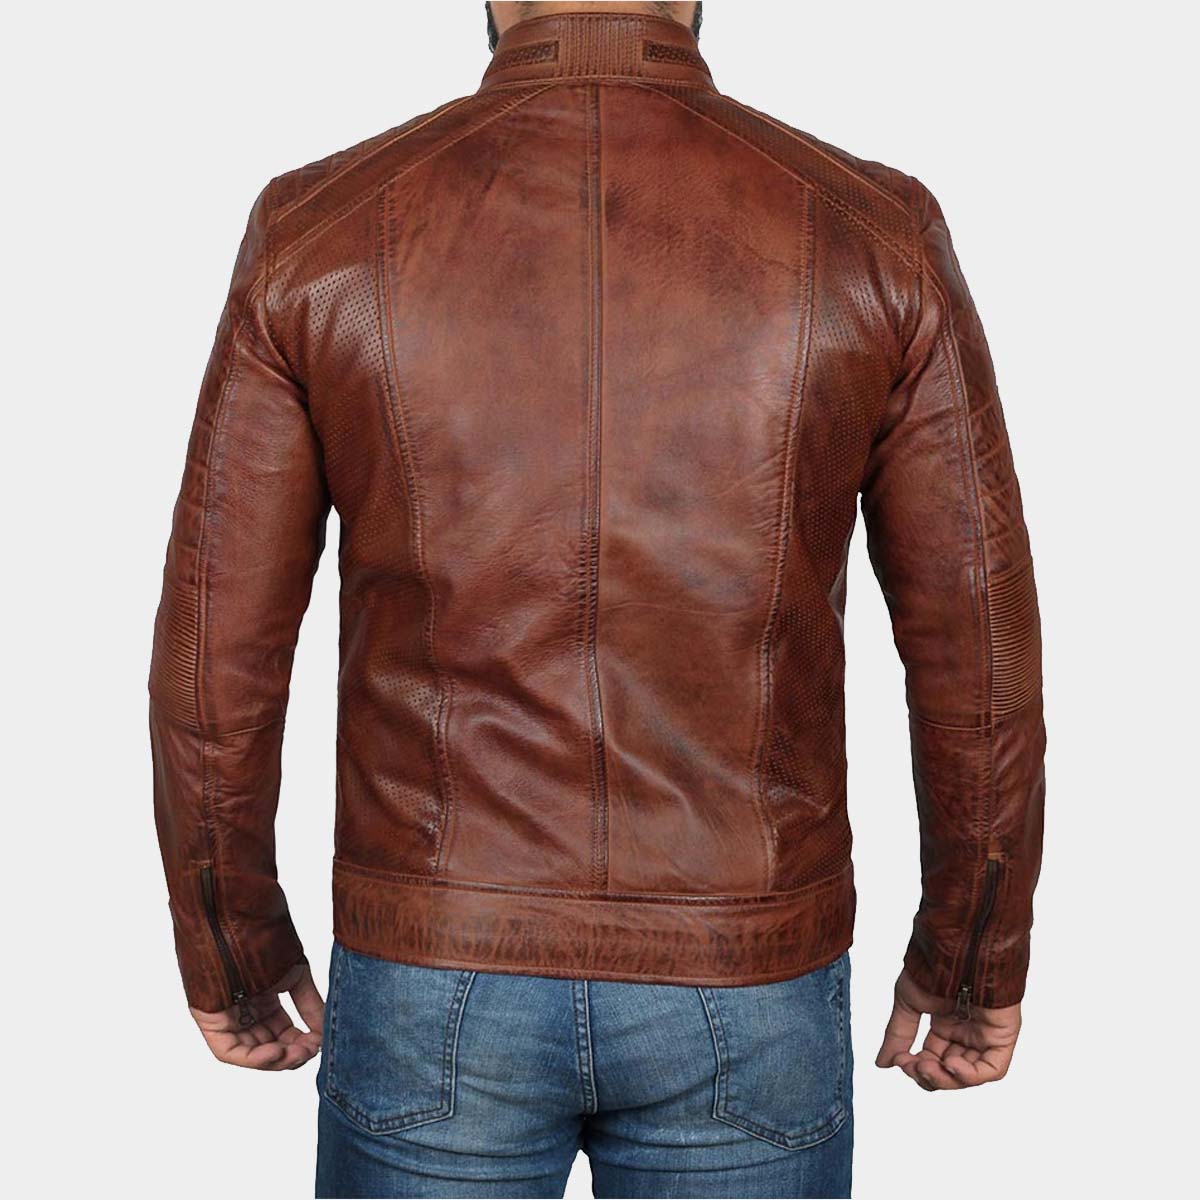 ChocolateBrown Leather Jacket